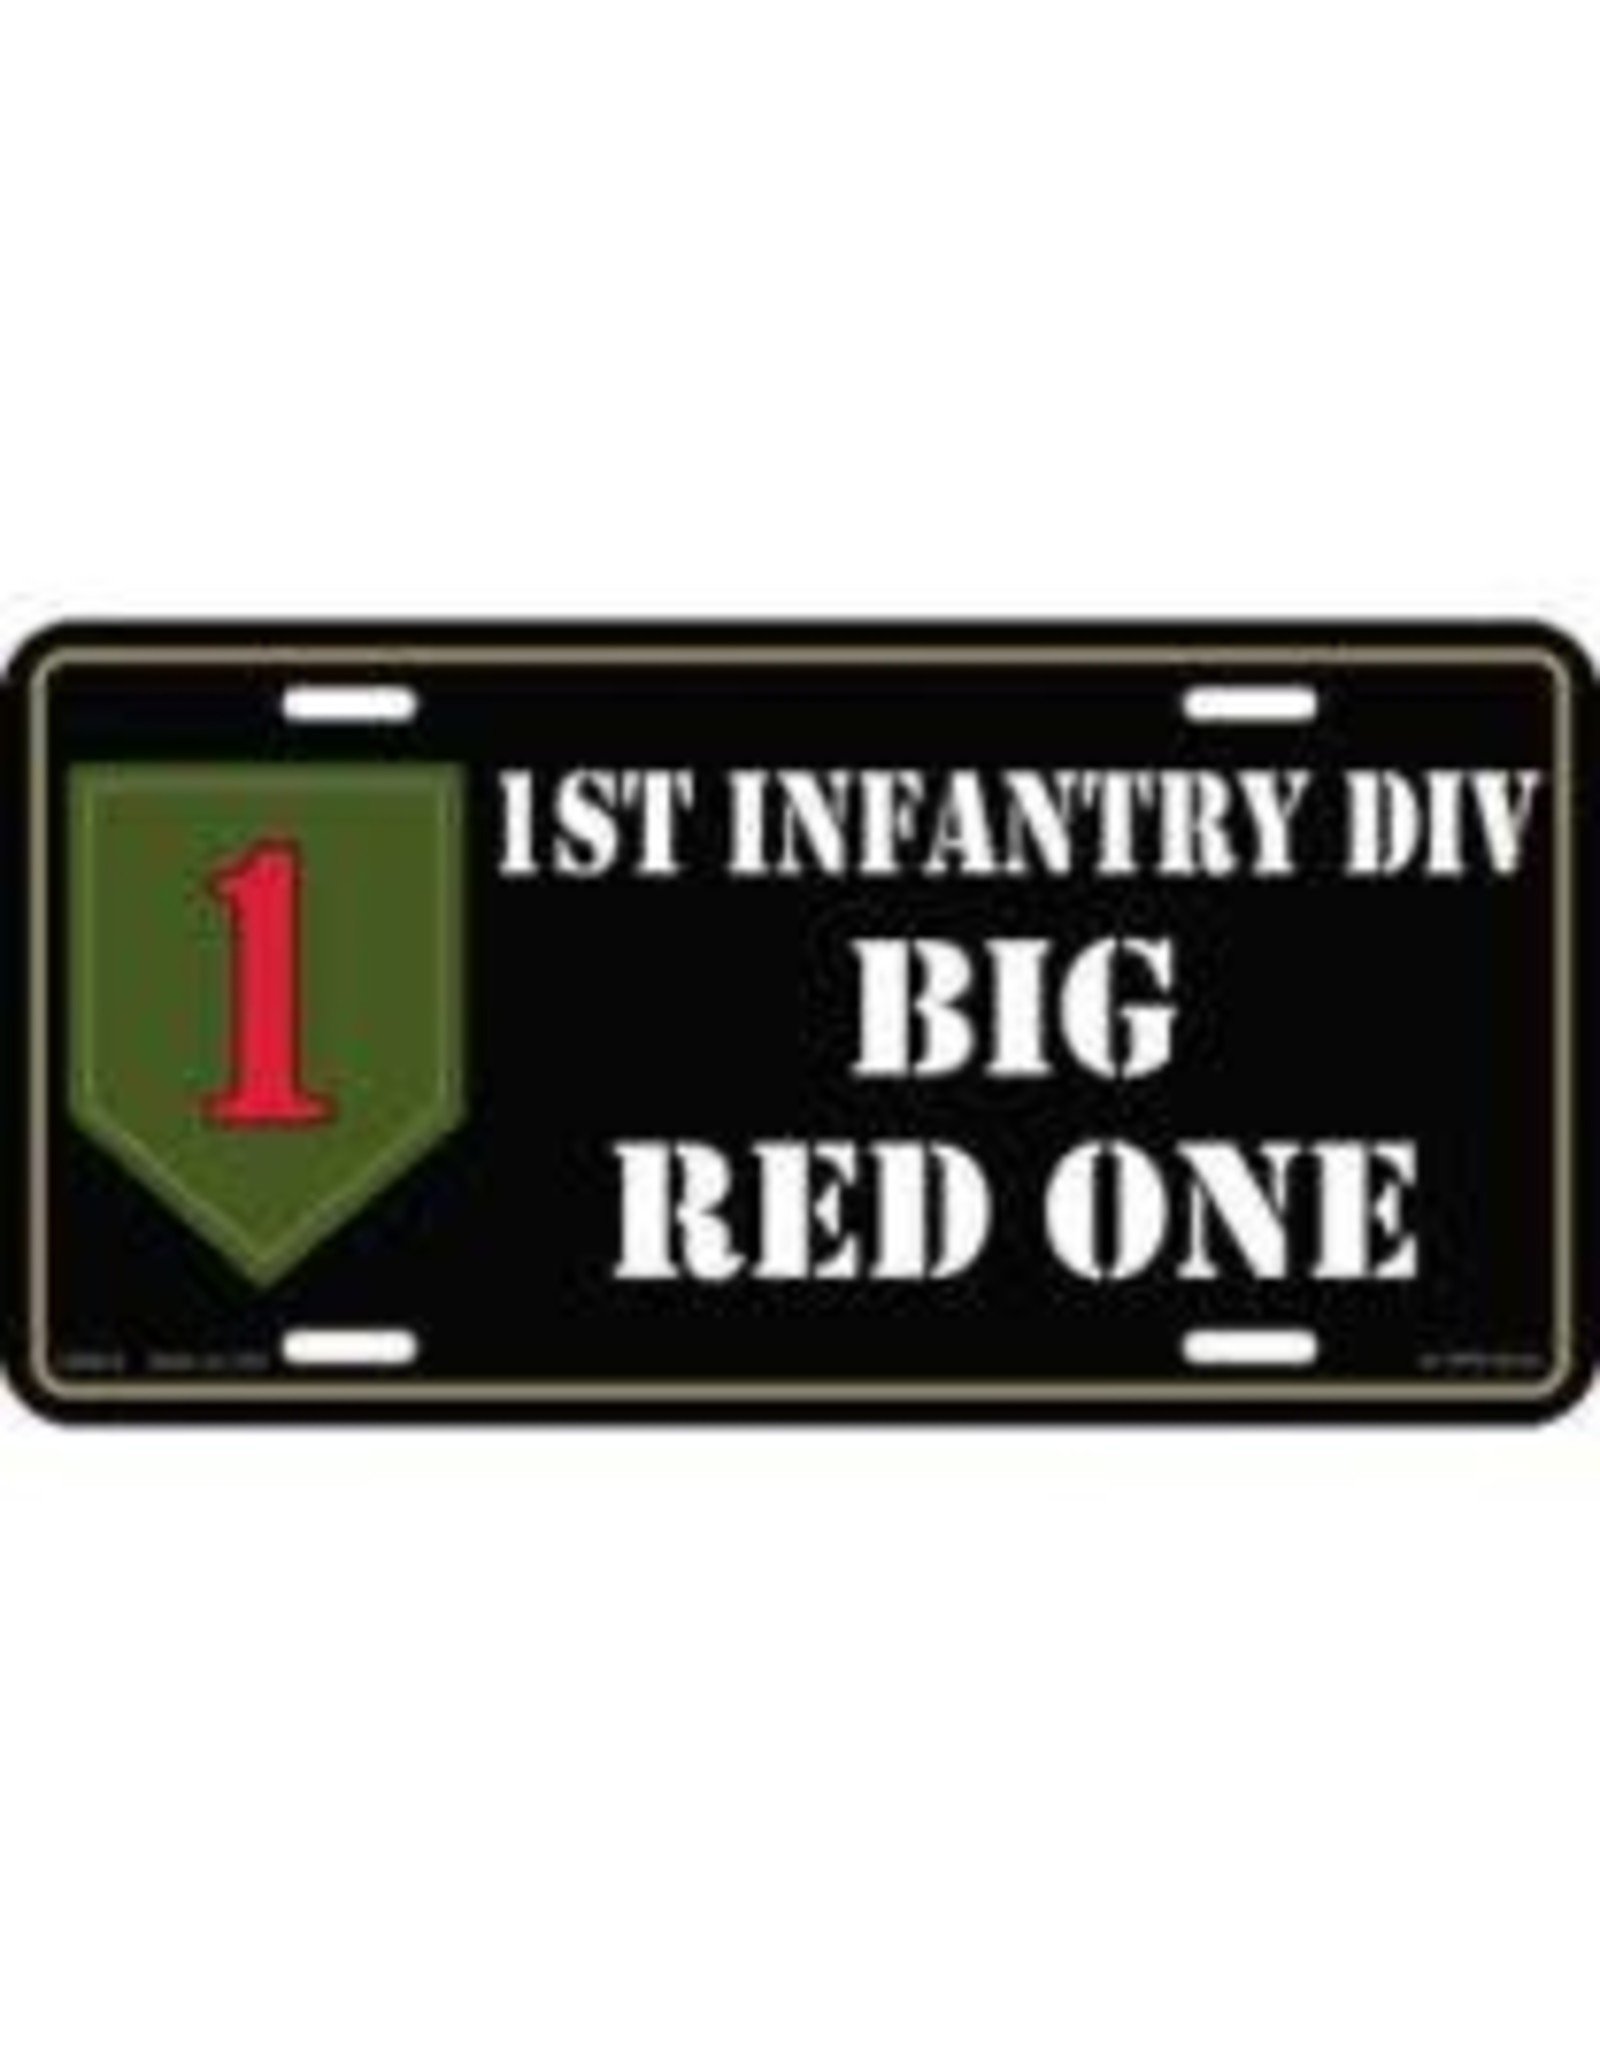 License Plate - 1st Infantry Division